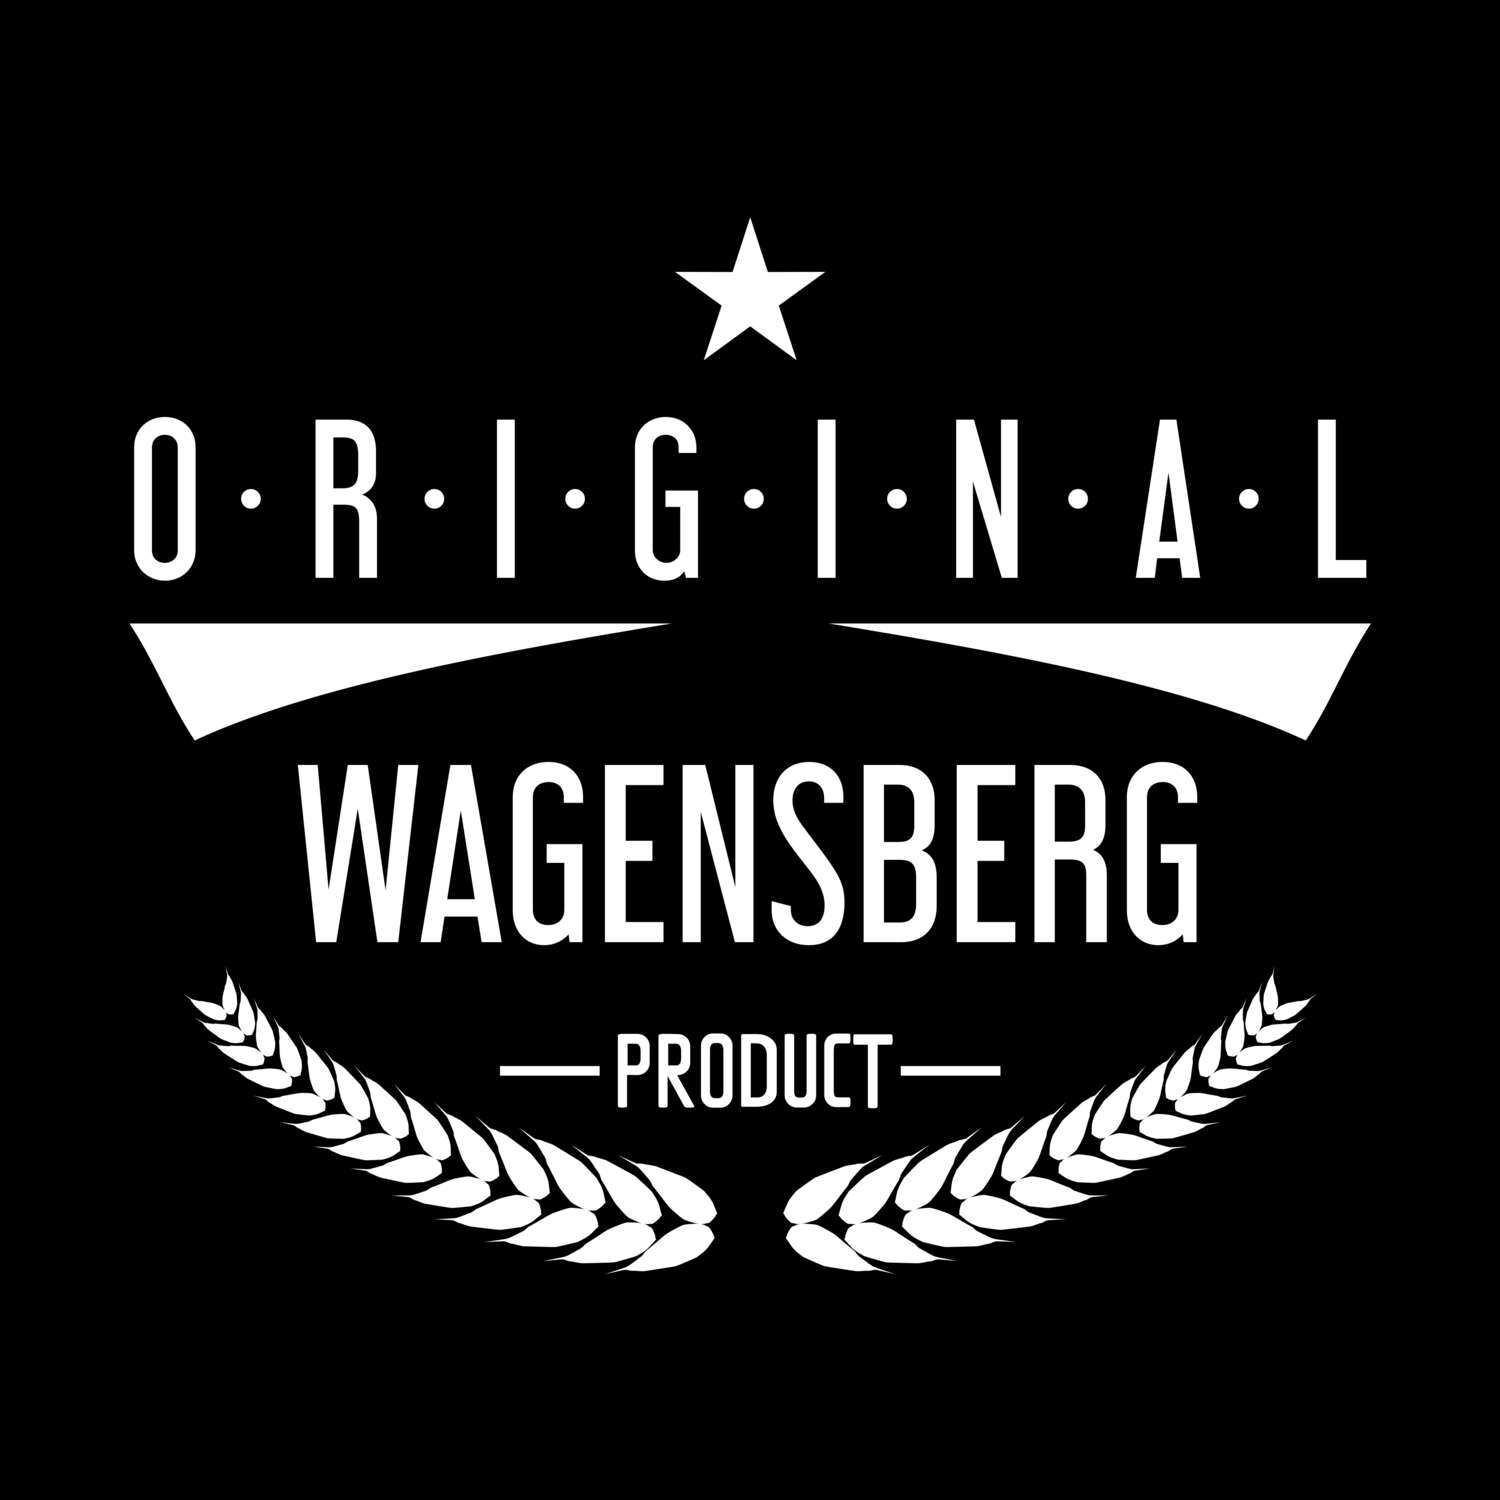 Wagensberg T-Shirt »Original Product«